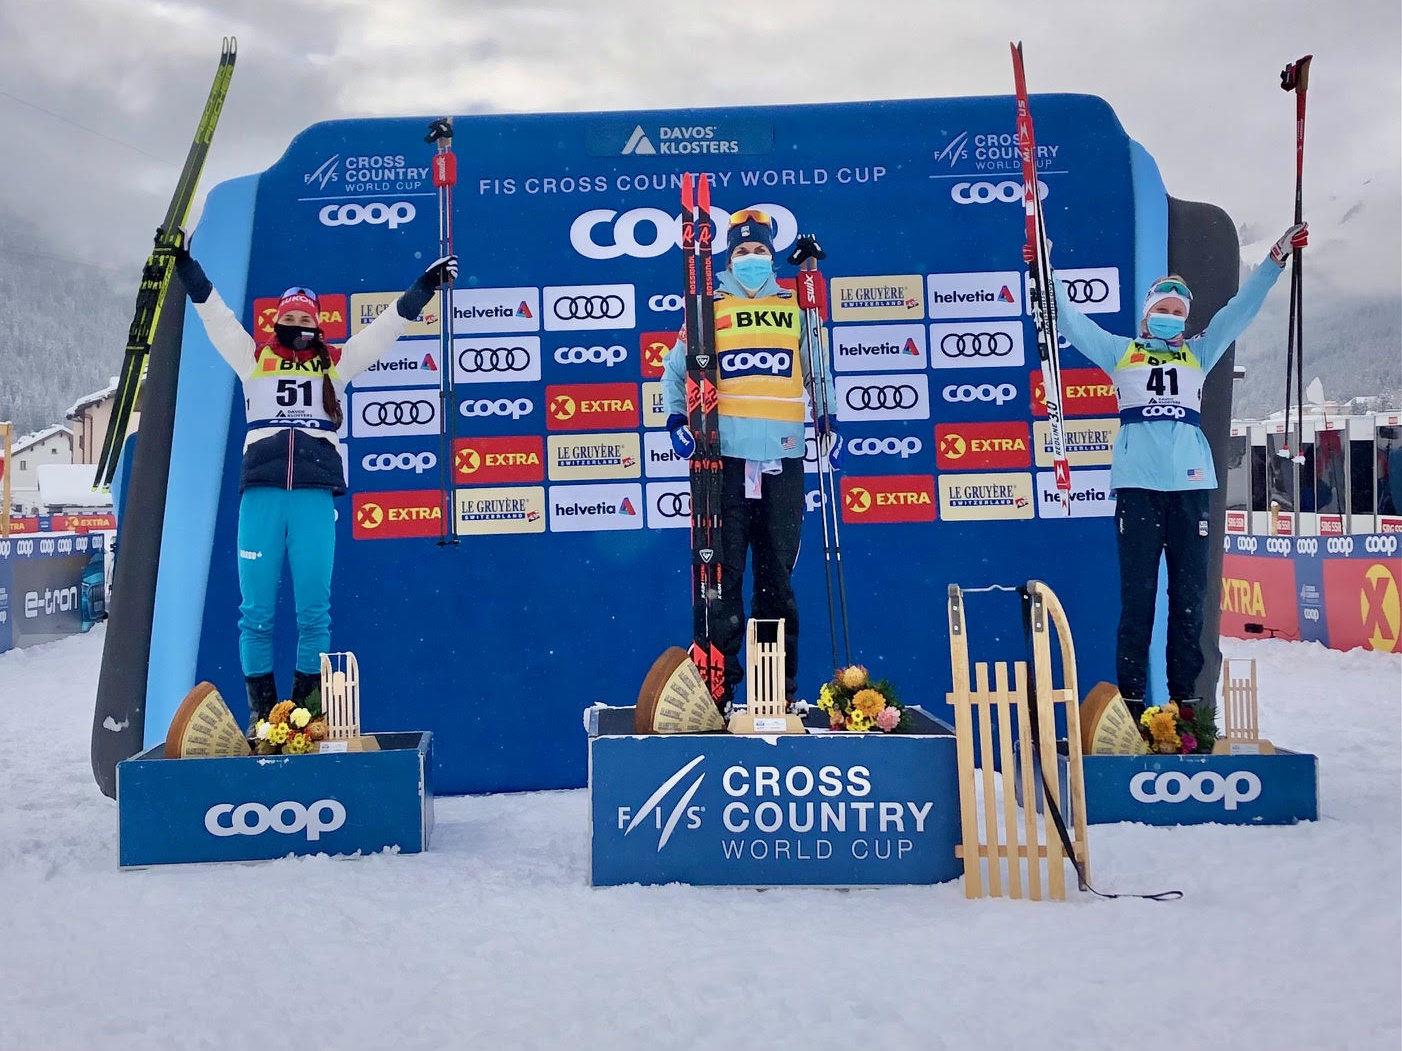 Three women hold up skis on podiums